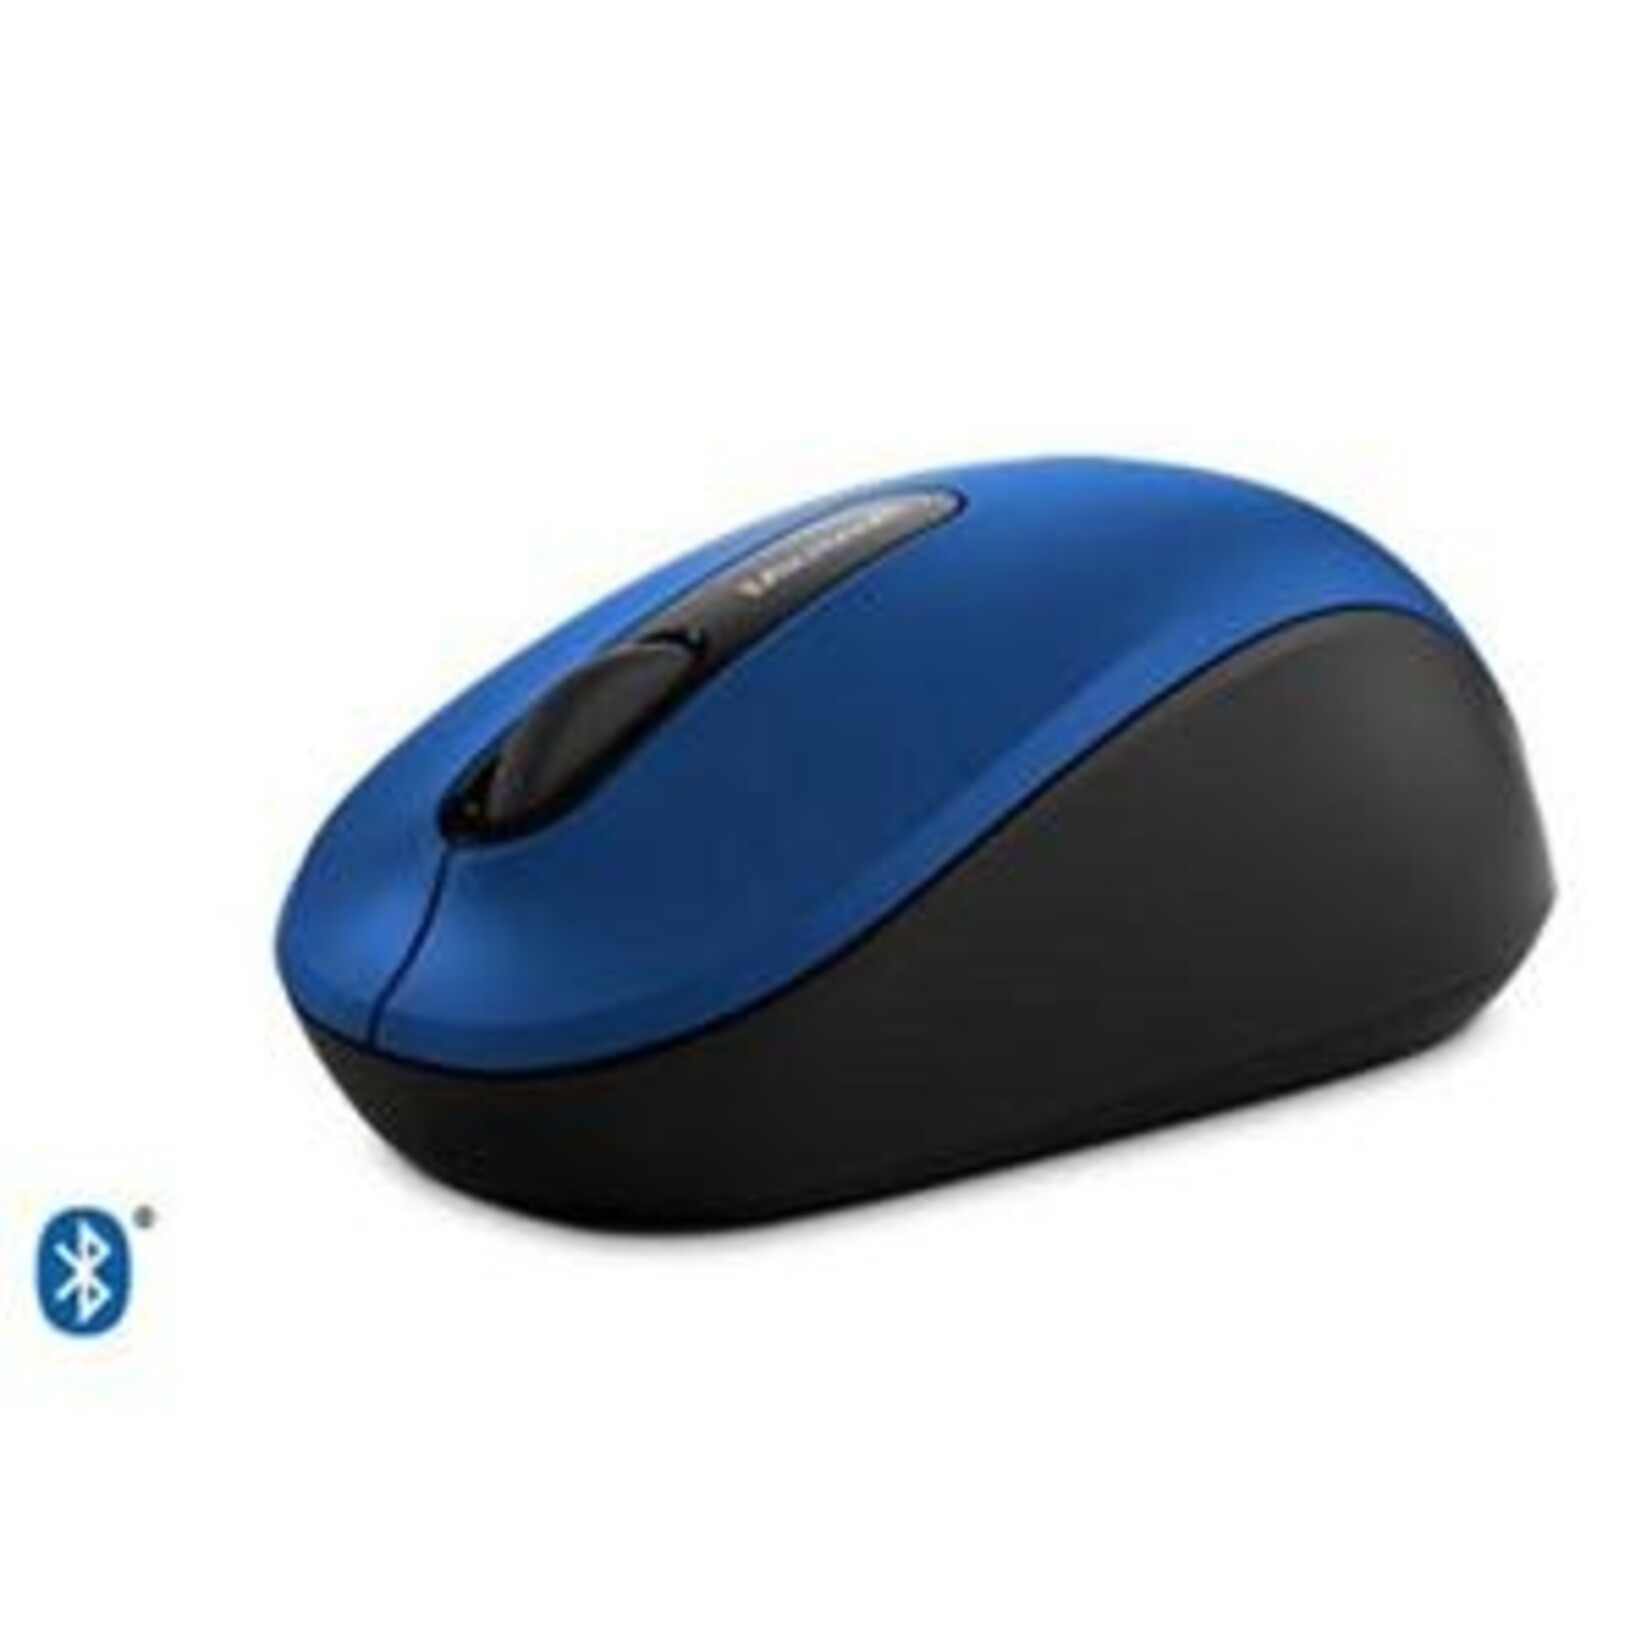 Microsoft Microsoft Bluetooth Mouse 3600